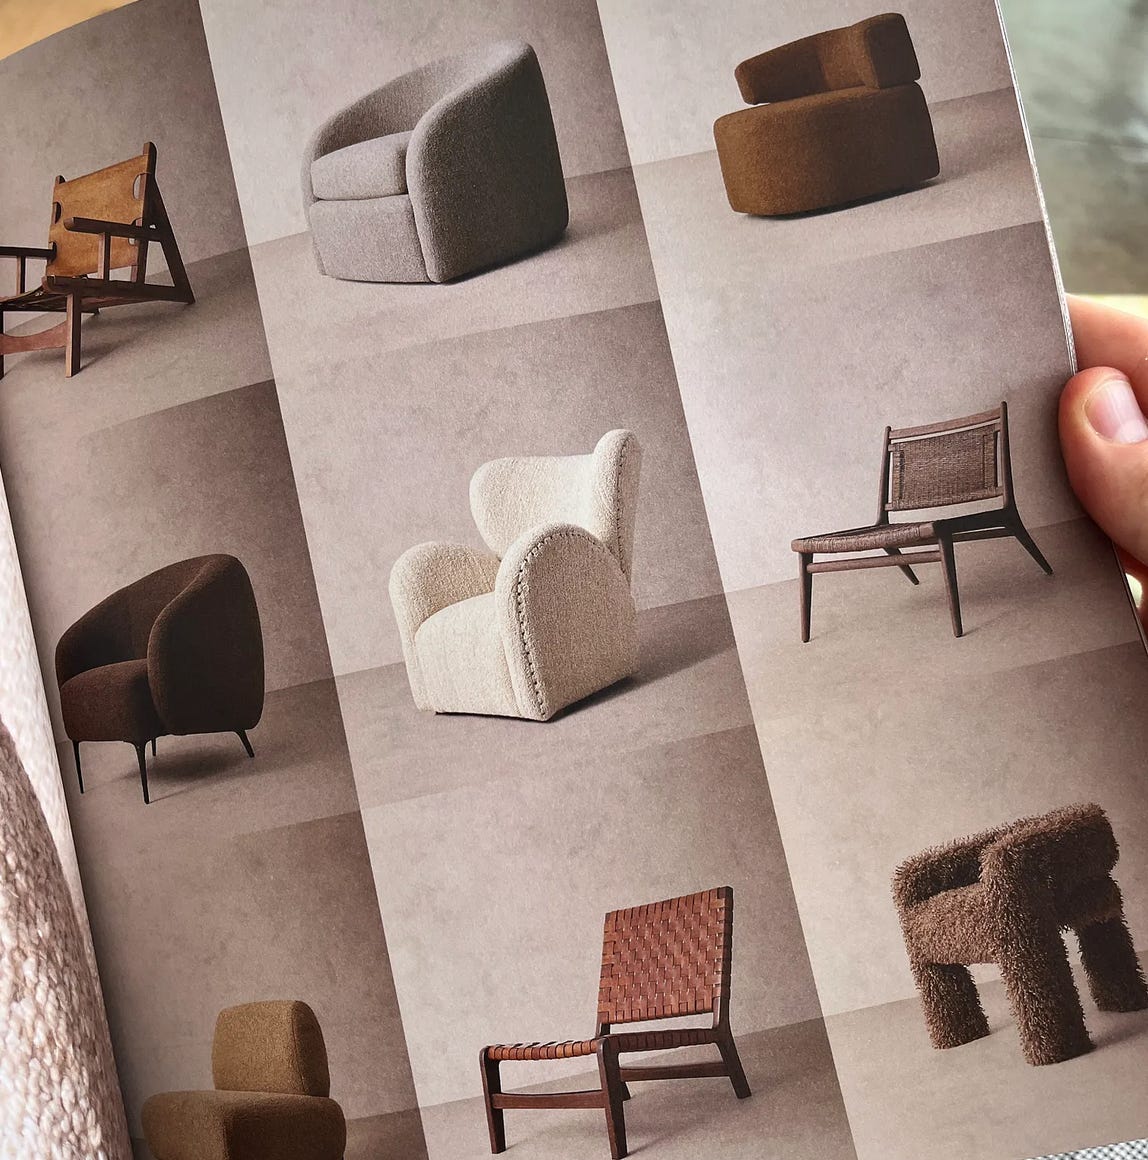 Catalog photo of brown furniture